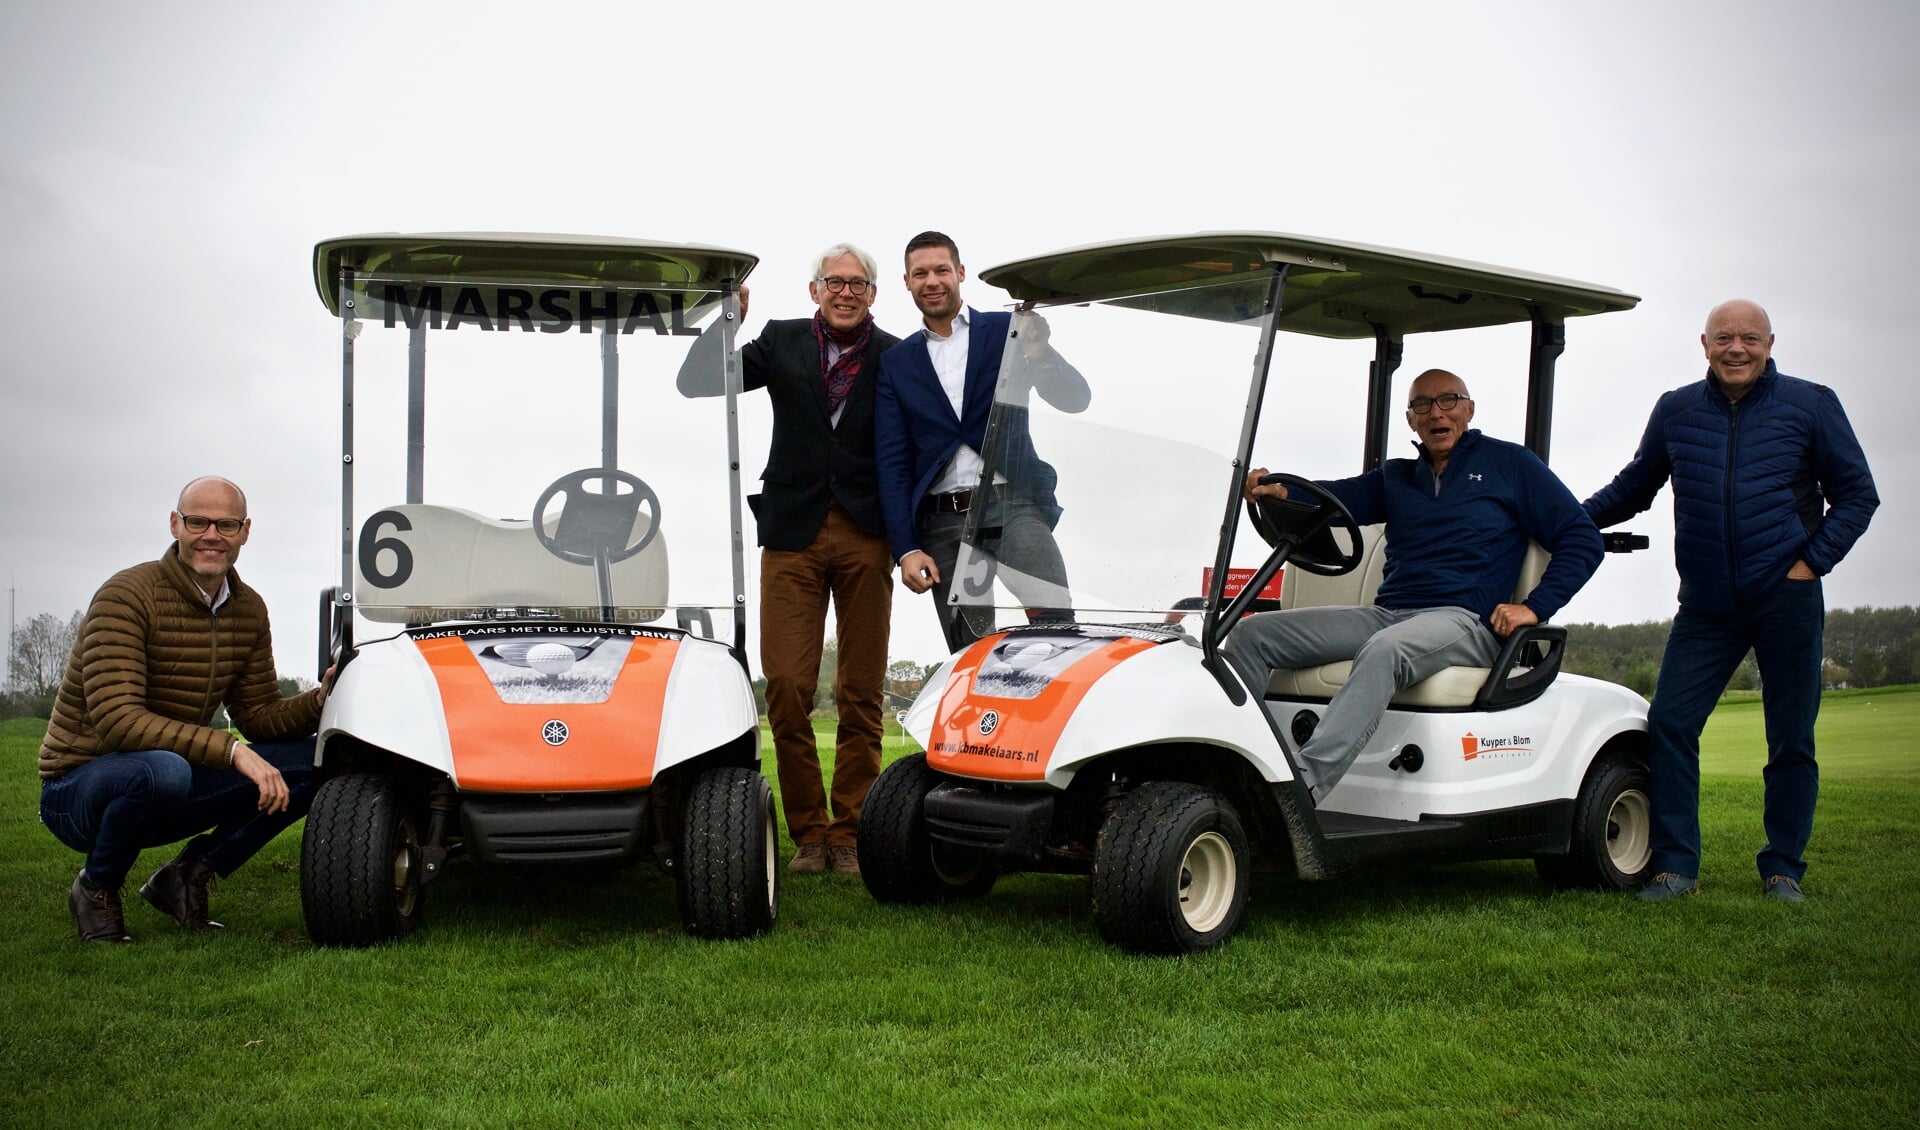 Twee nieuwe golfbuggy's gesponsord door Kuypers en Blom Makelaars.
Vlnr. Ronald Blom, Hidde Hoekstra, Bas Kuyper, Gerard van Velzen, Roger Nutt.